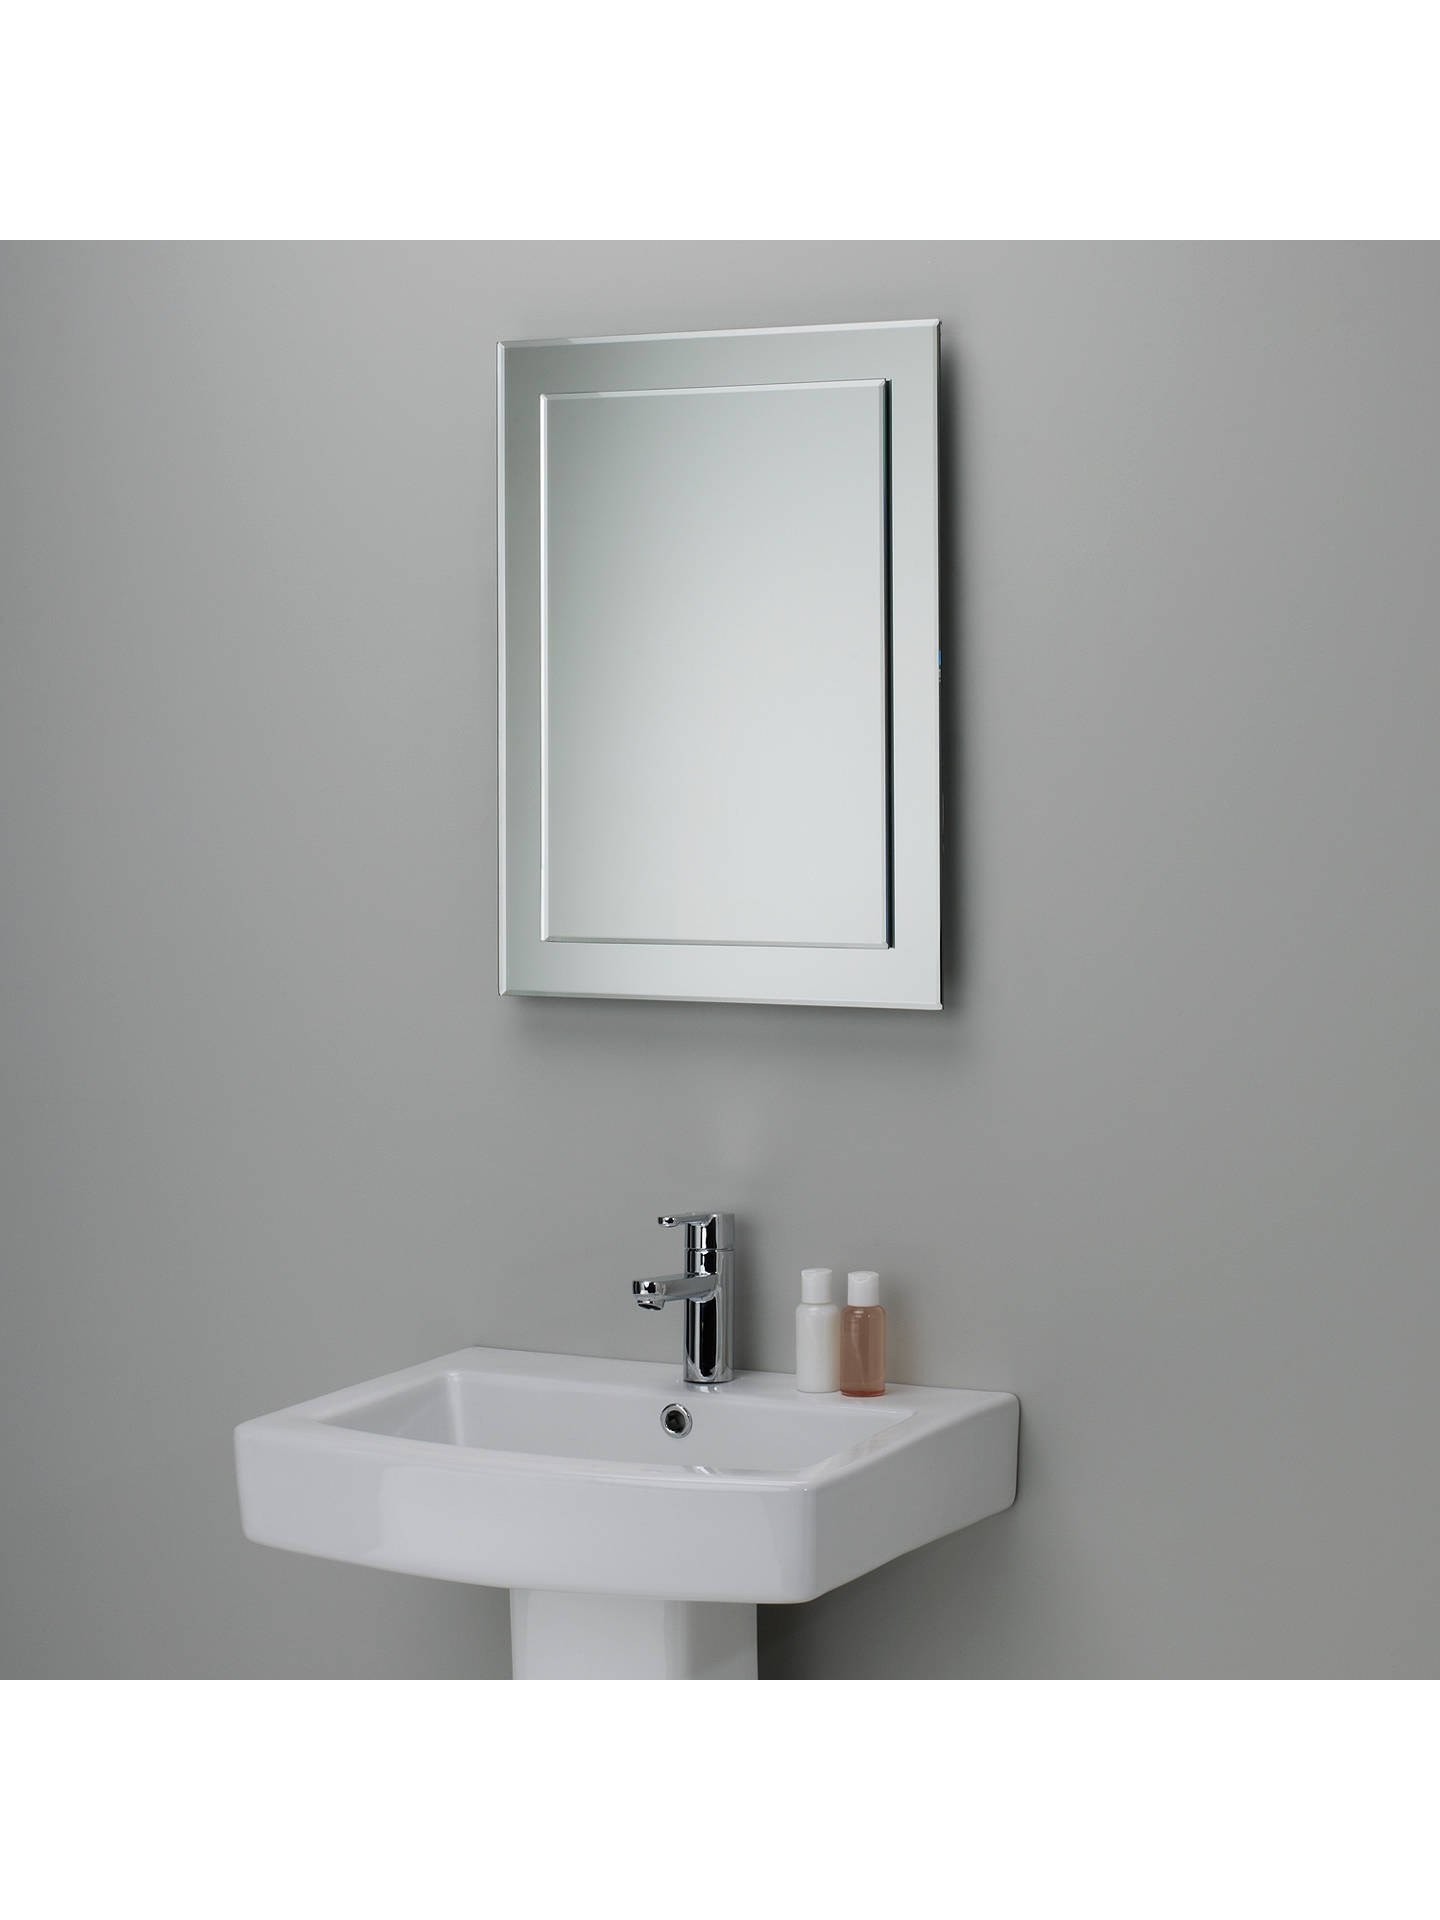 Bathroom Mirrors Online
 John Lewis & Partners Duo Wall Bathroom Mirror 60 x 45cm